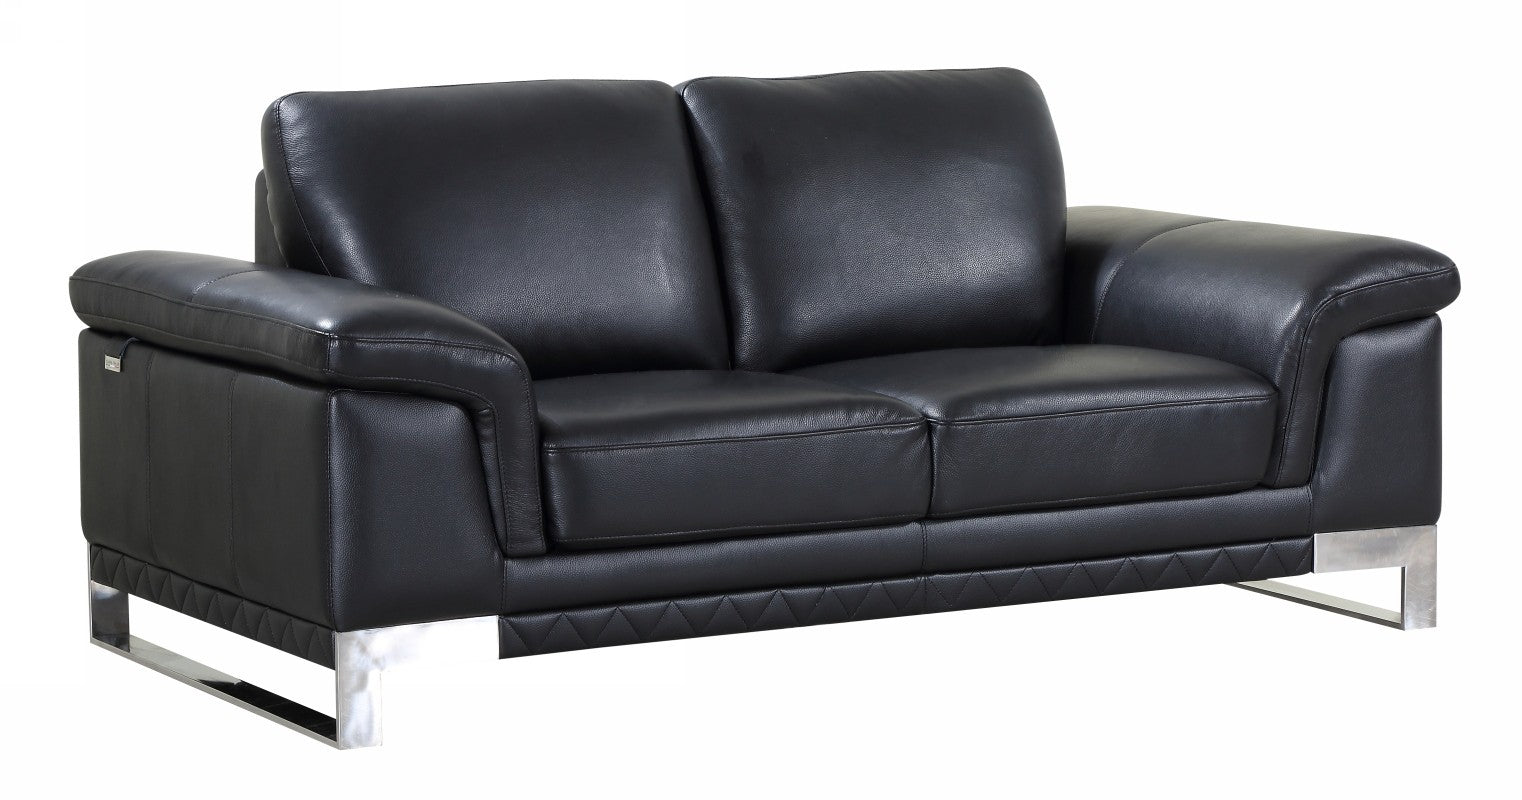 U411 Premium Black Leather Living Room Sofa Set